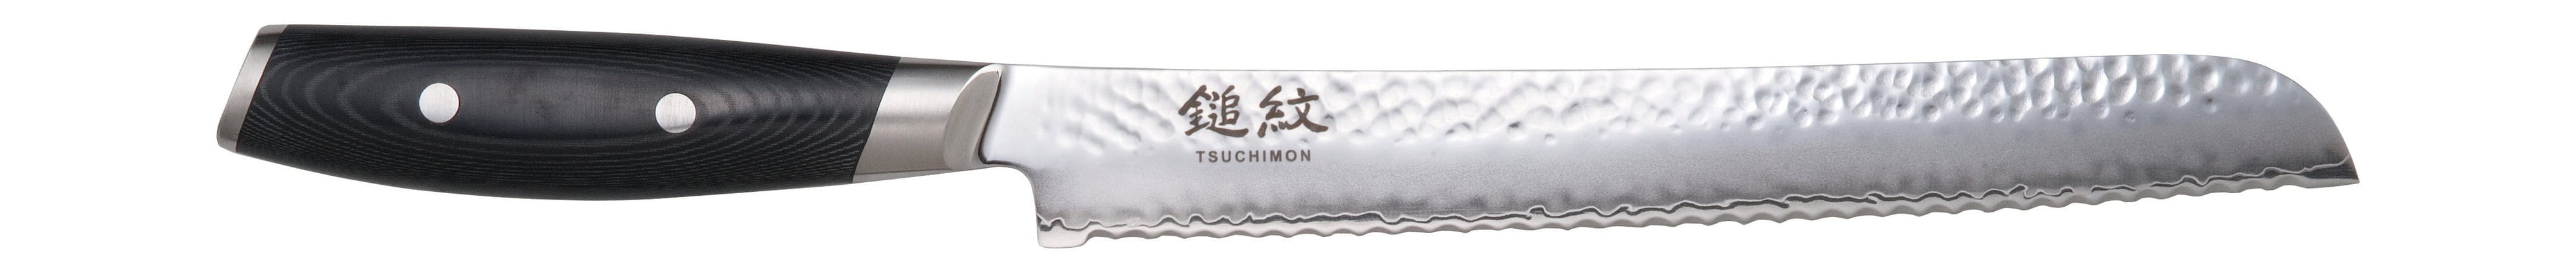 Yaxell Tsuchimon Brotmesser, 23 Cm